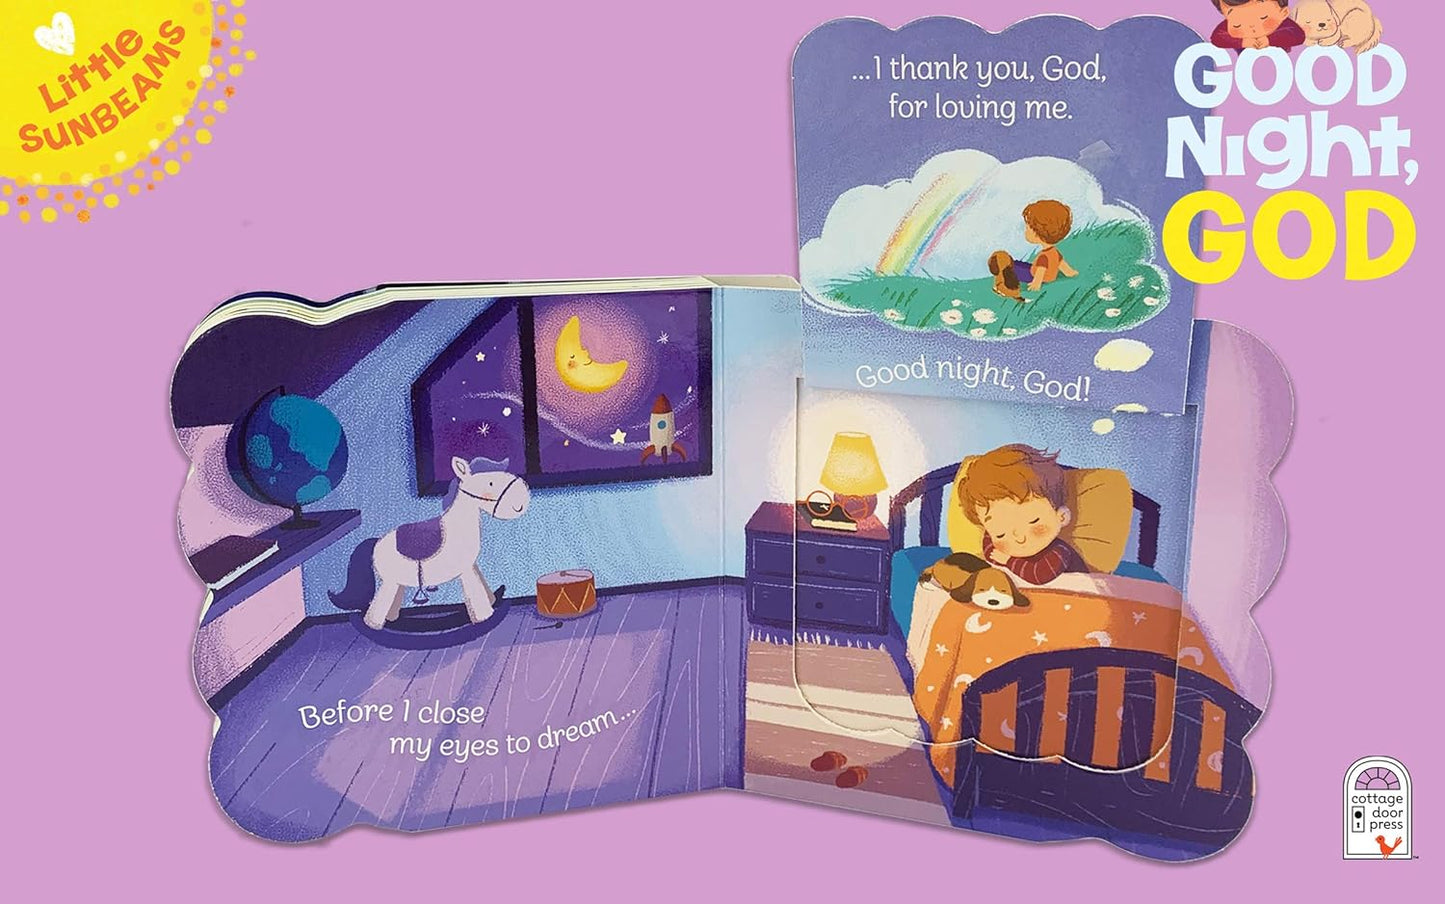 Good Night, God Lift-a-Flap Book